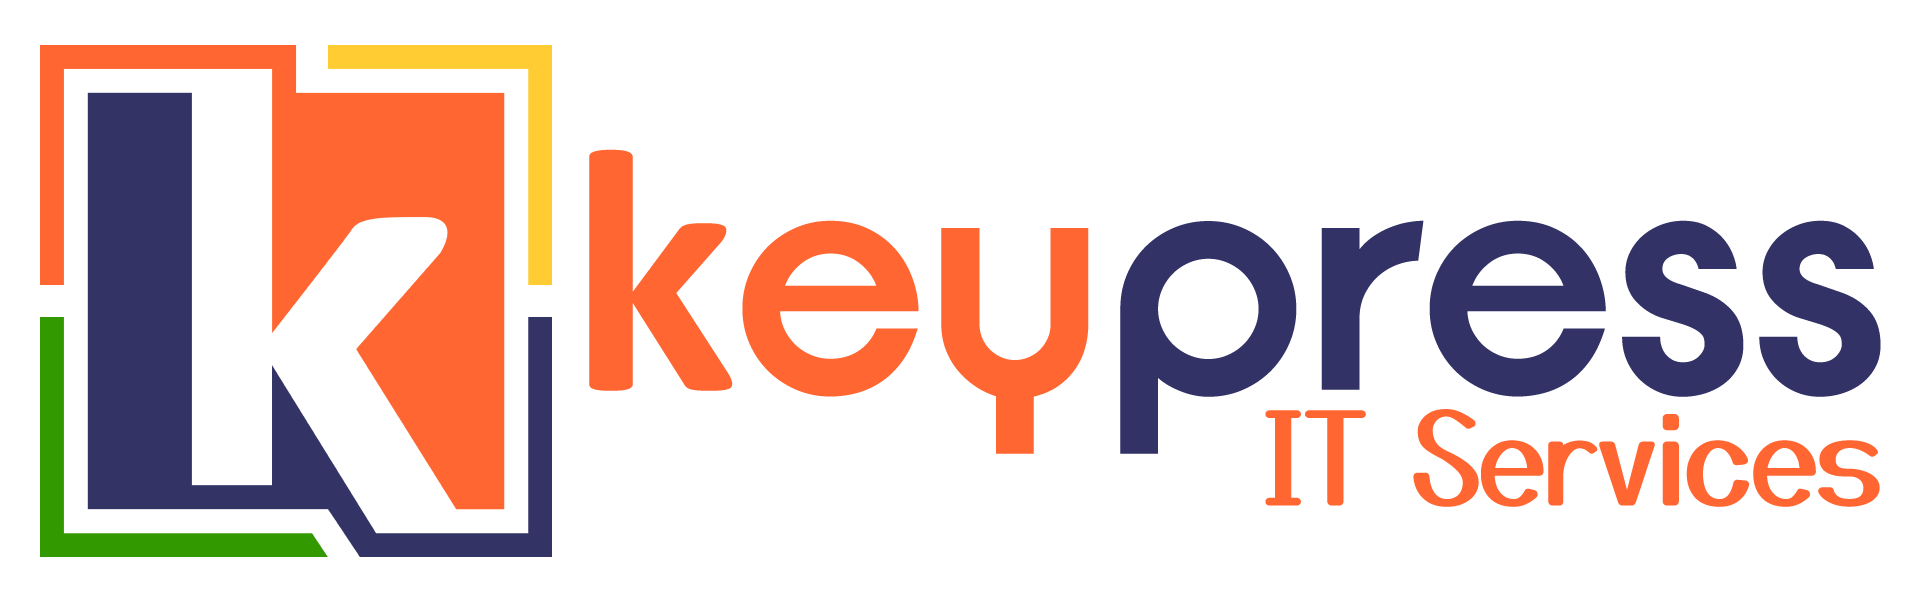 Keypress IT Services Logo